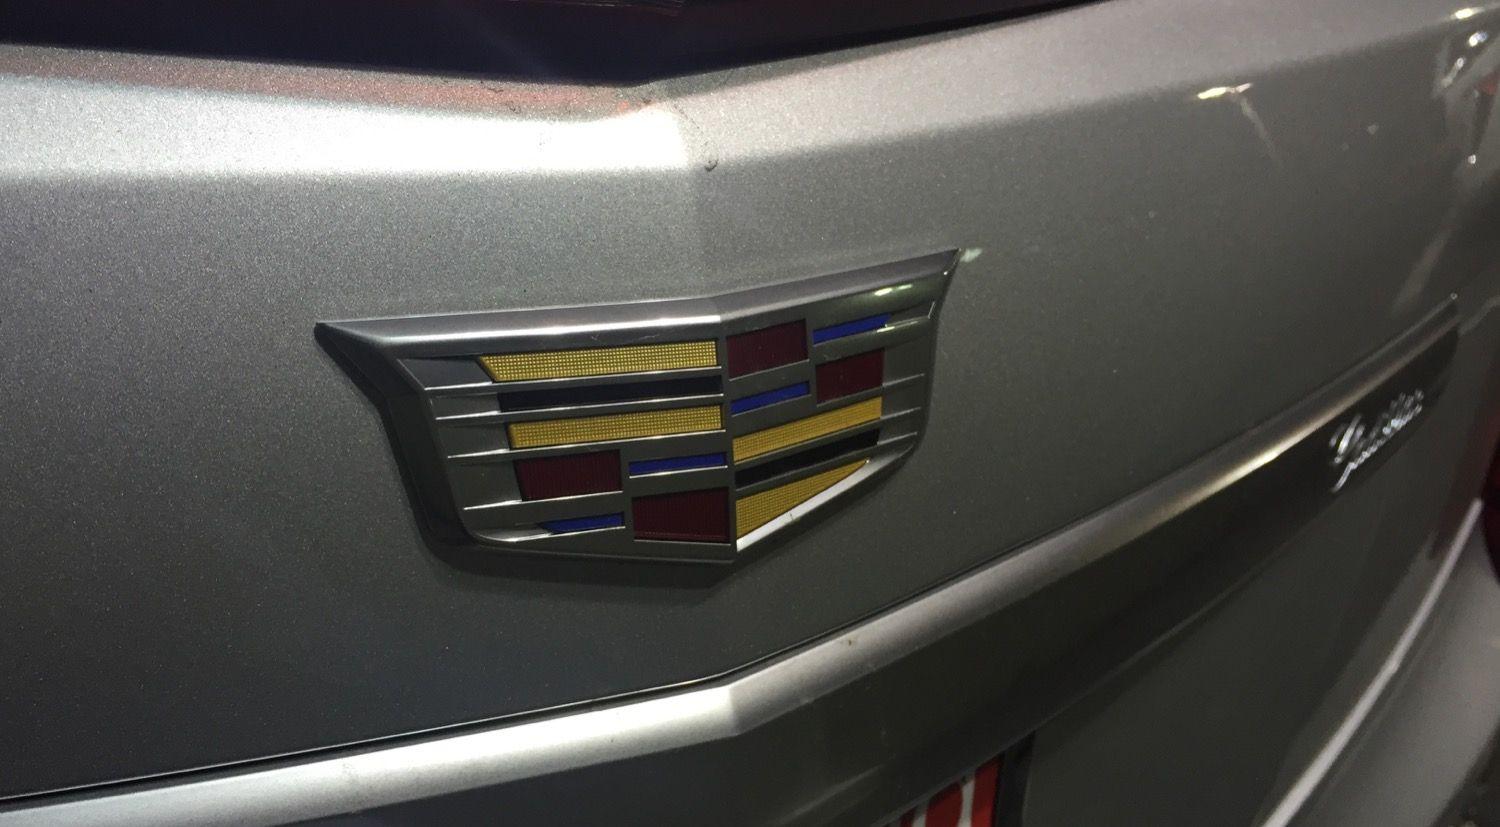 2016 New Cadillac Logo - The New Front Fascia Of The 2016 Cadillac XTS